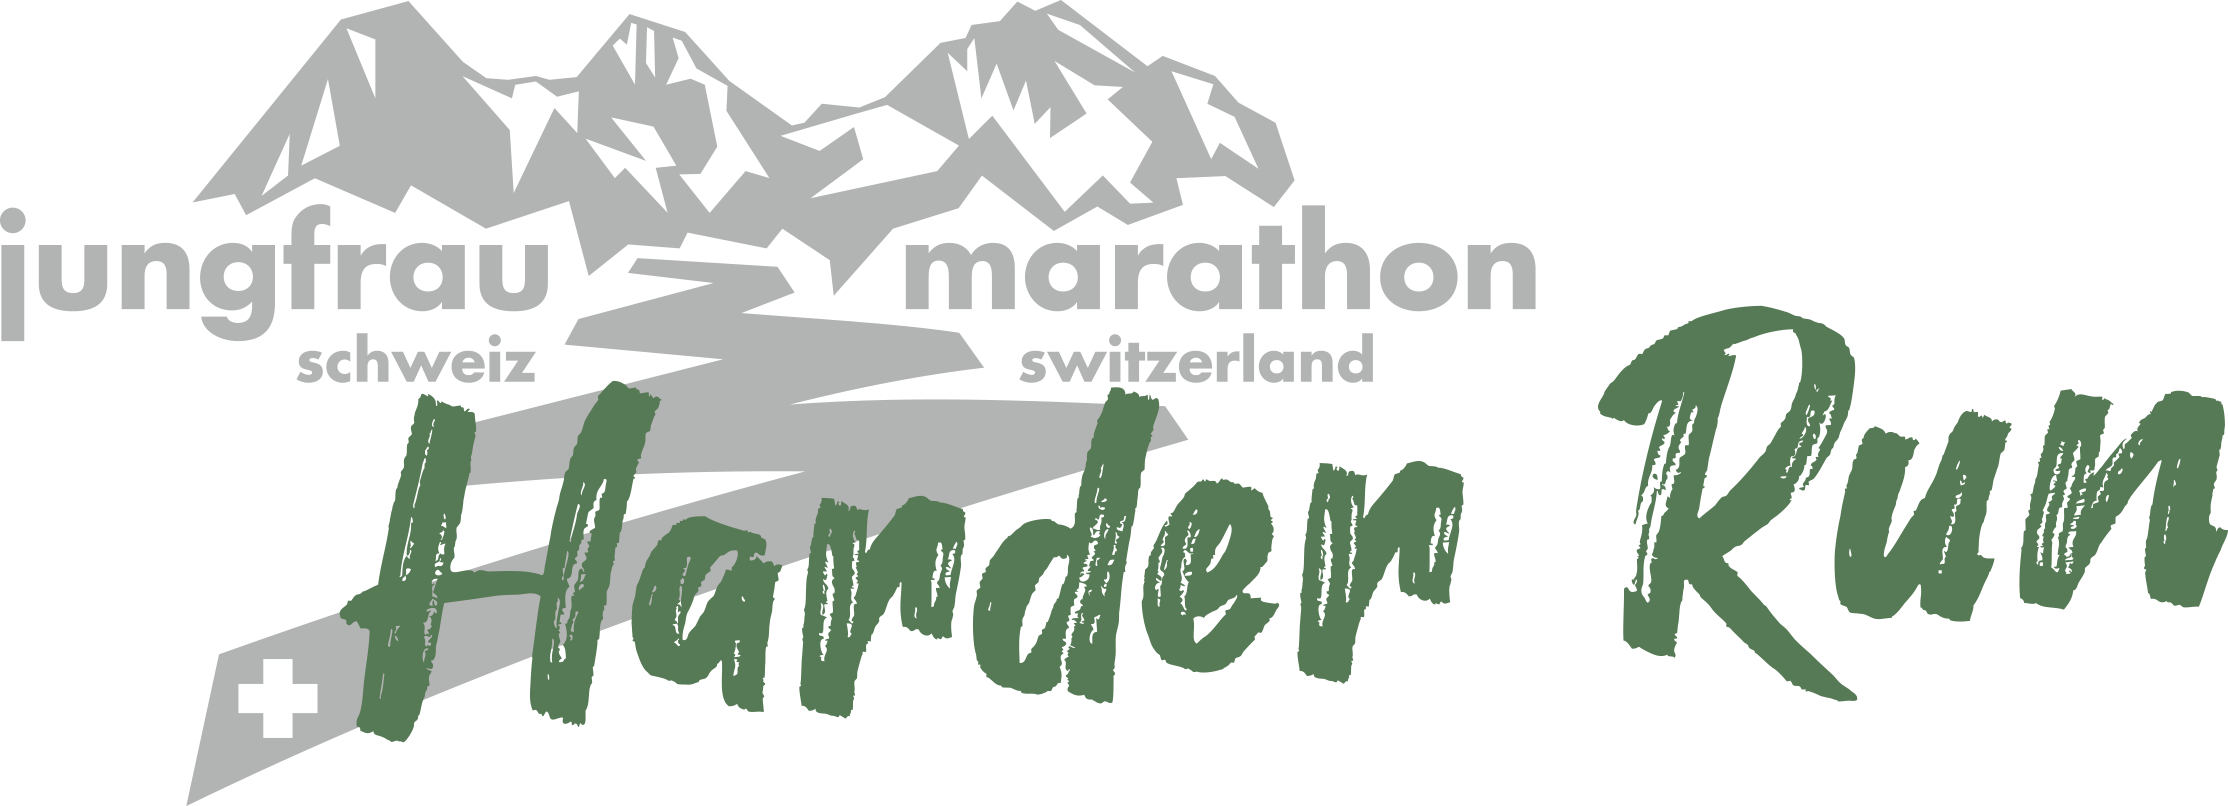 5. Jungfrau-Marathon Harder Run